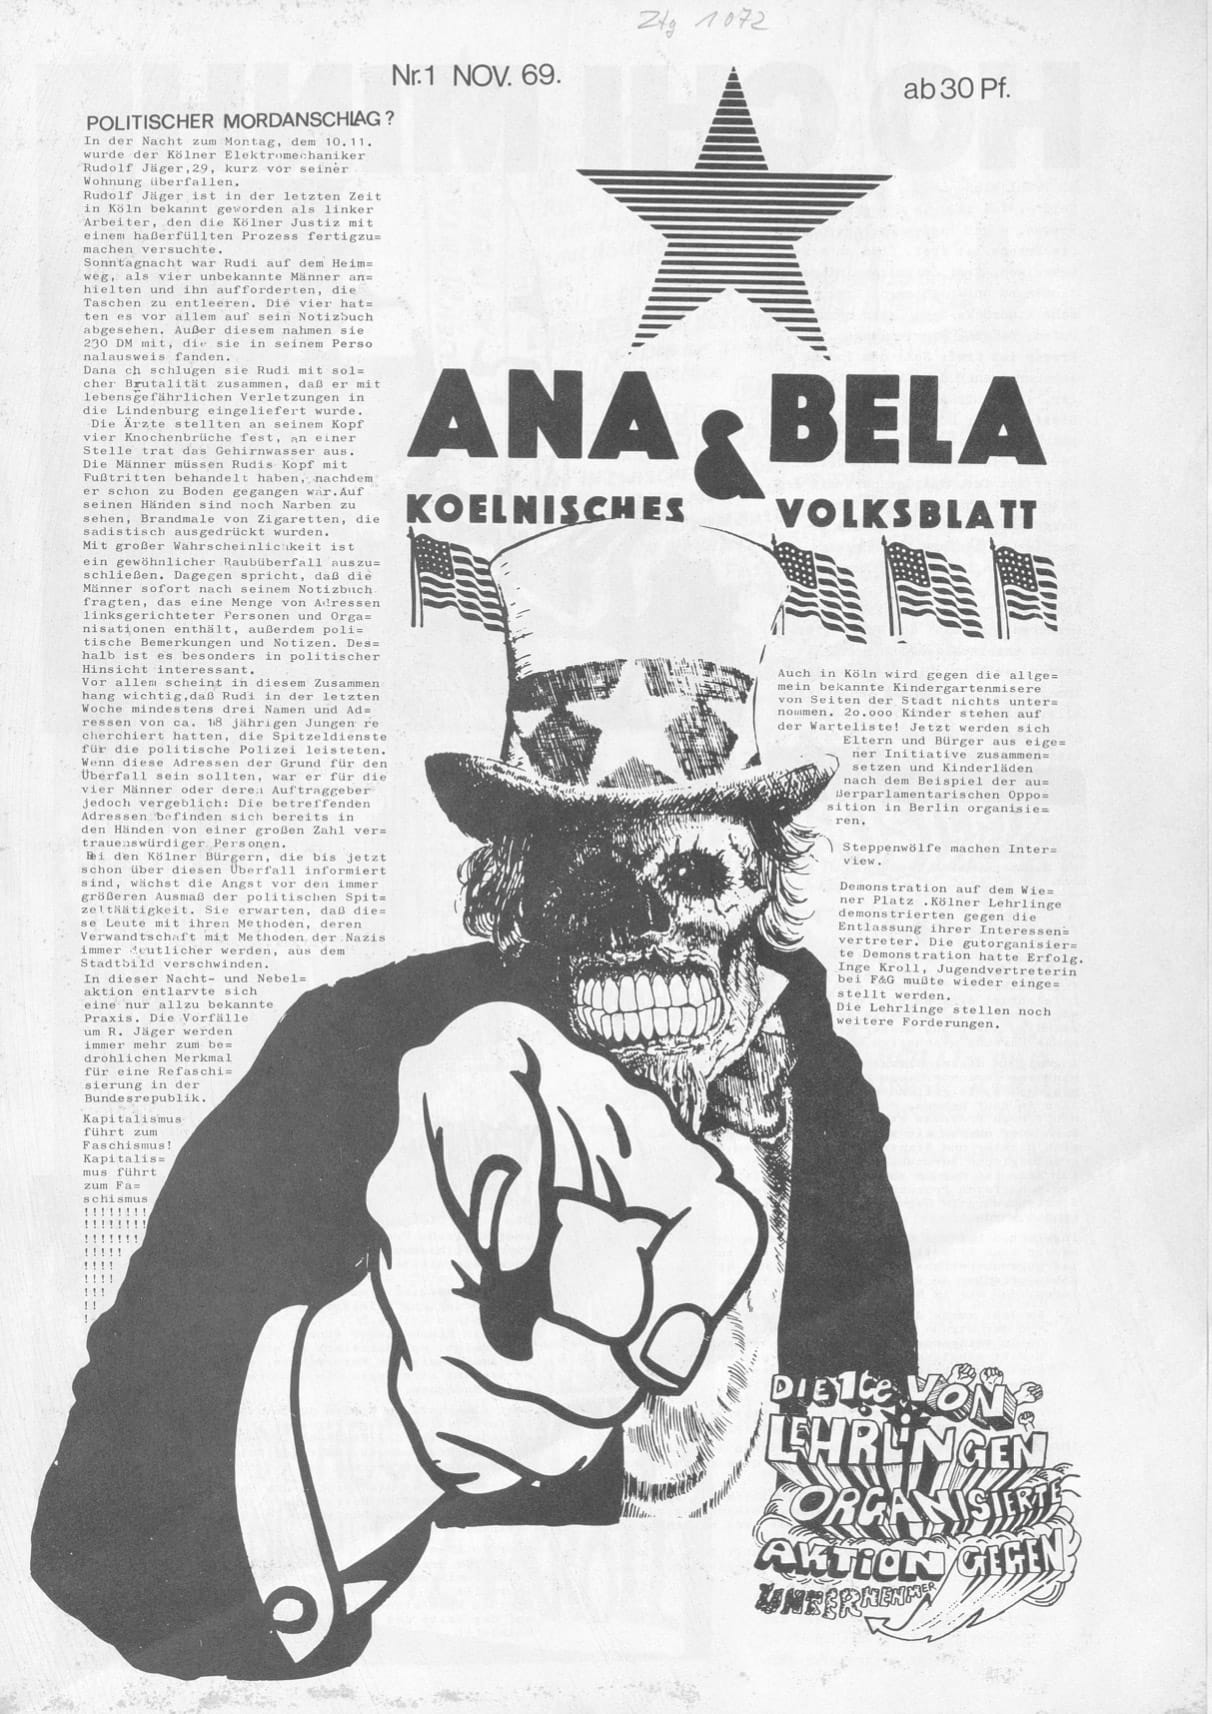 ANA&BELA, Cover